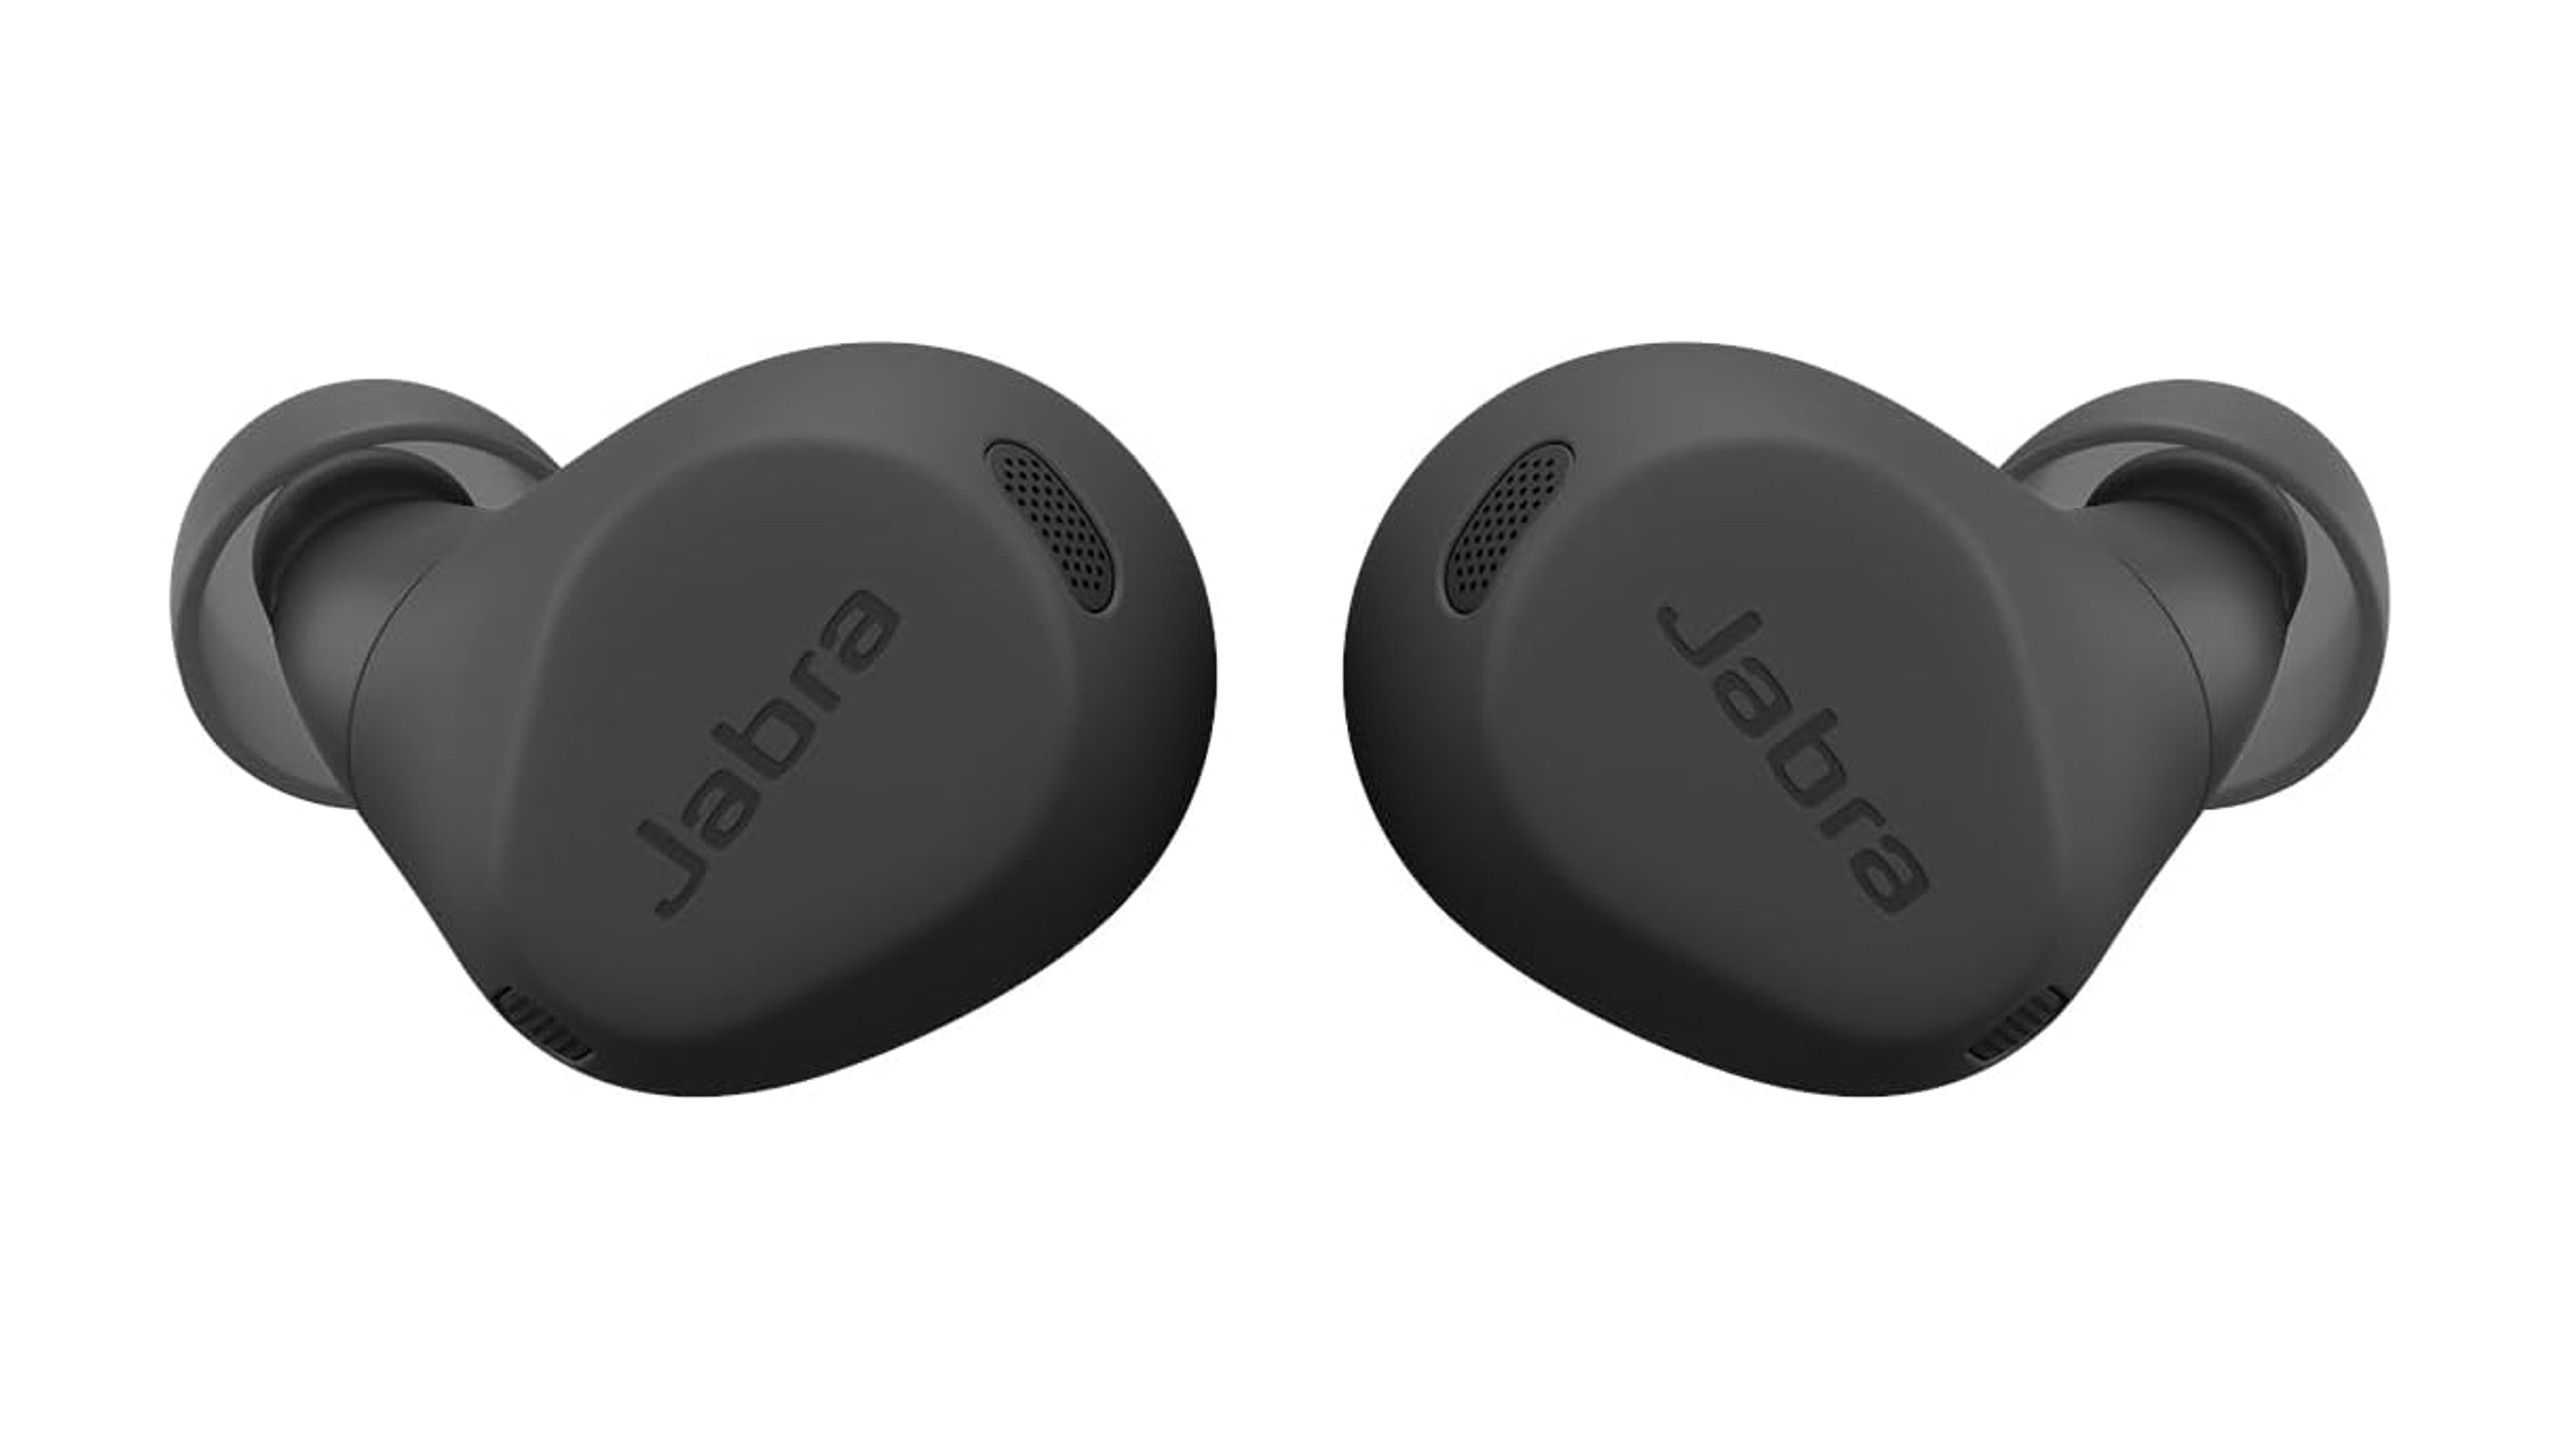 Jabra Elite 8 Active True Wireless Earbuds - Black